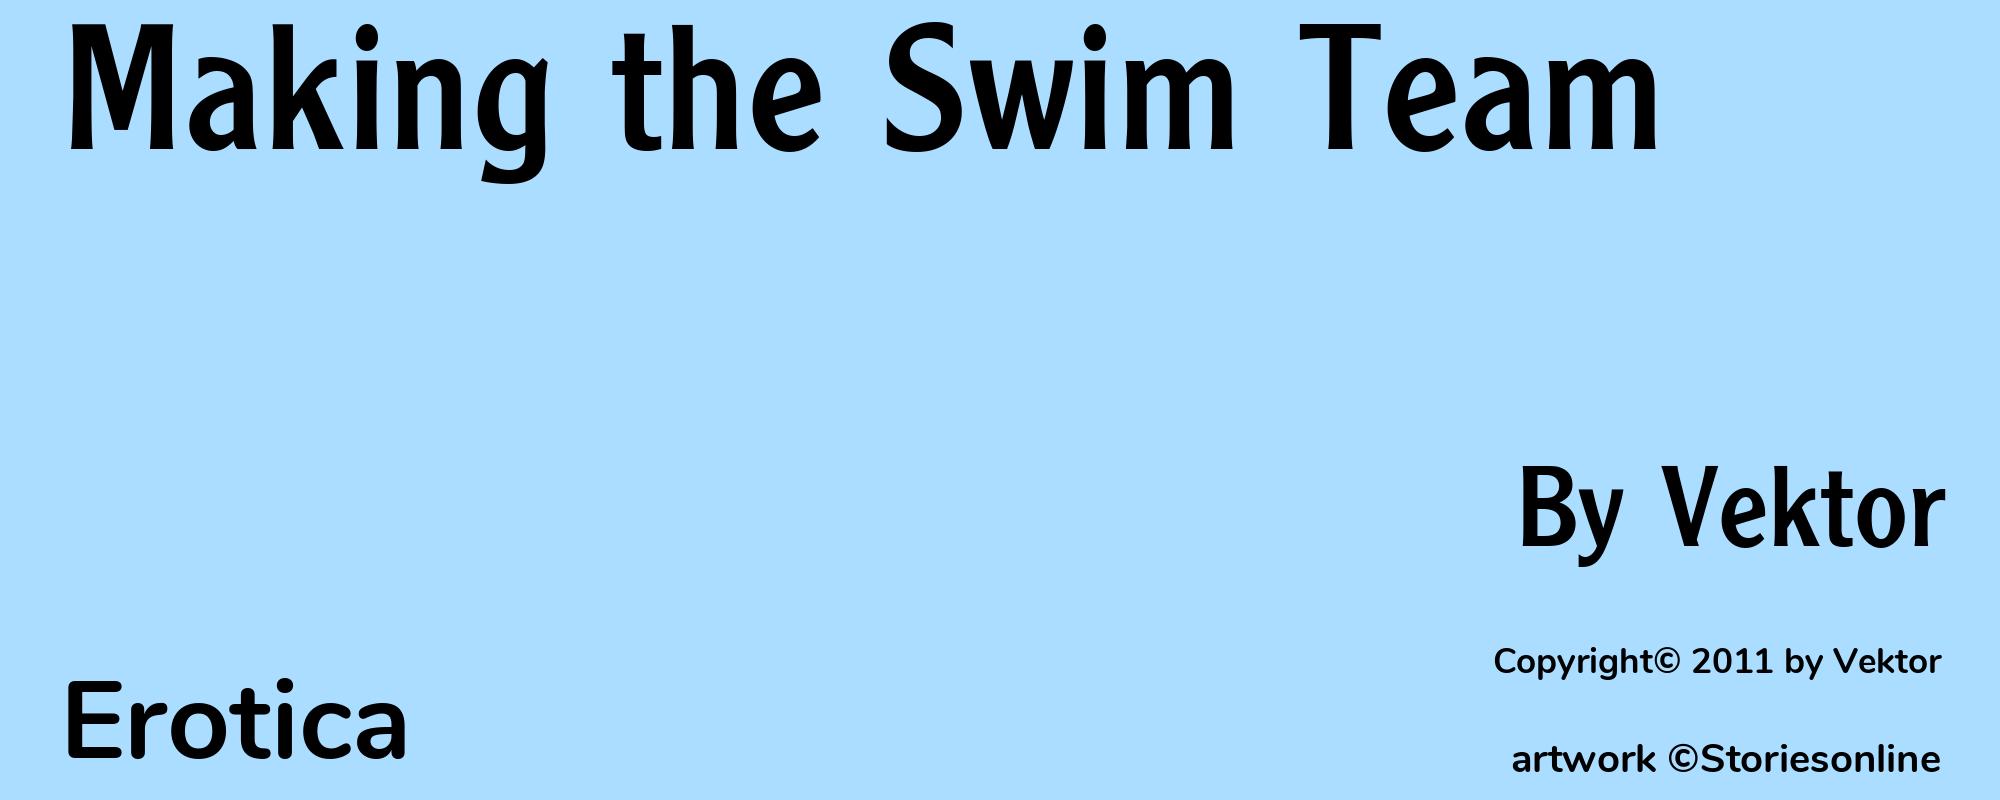 Making the Swim Team - Cover